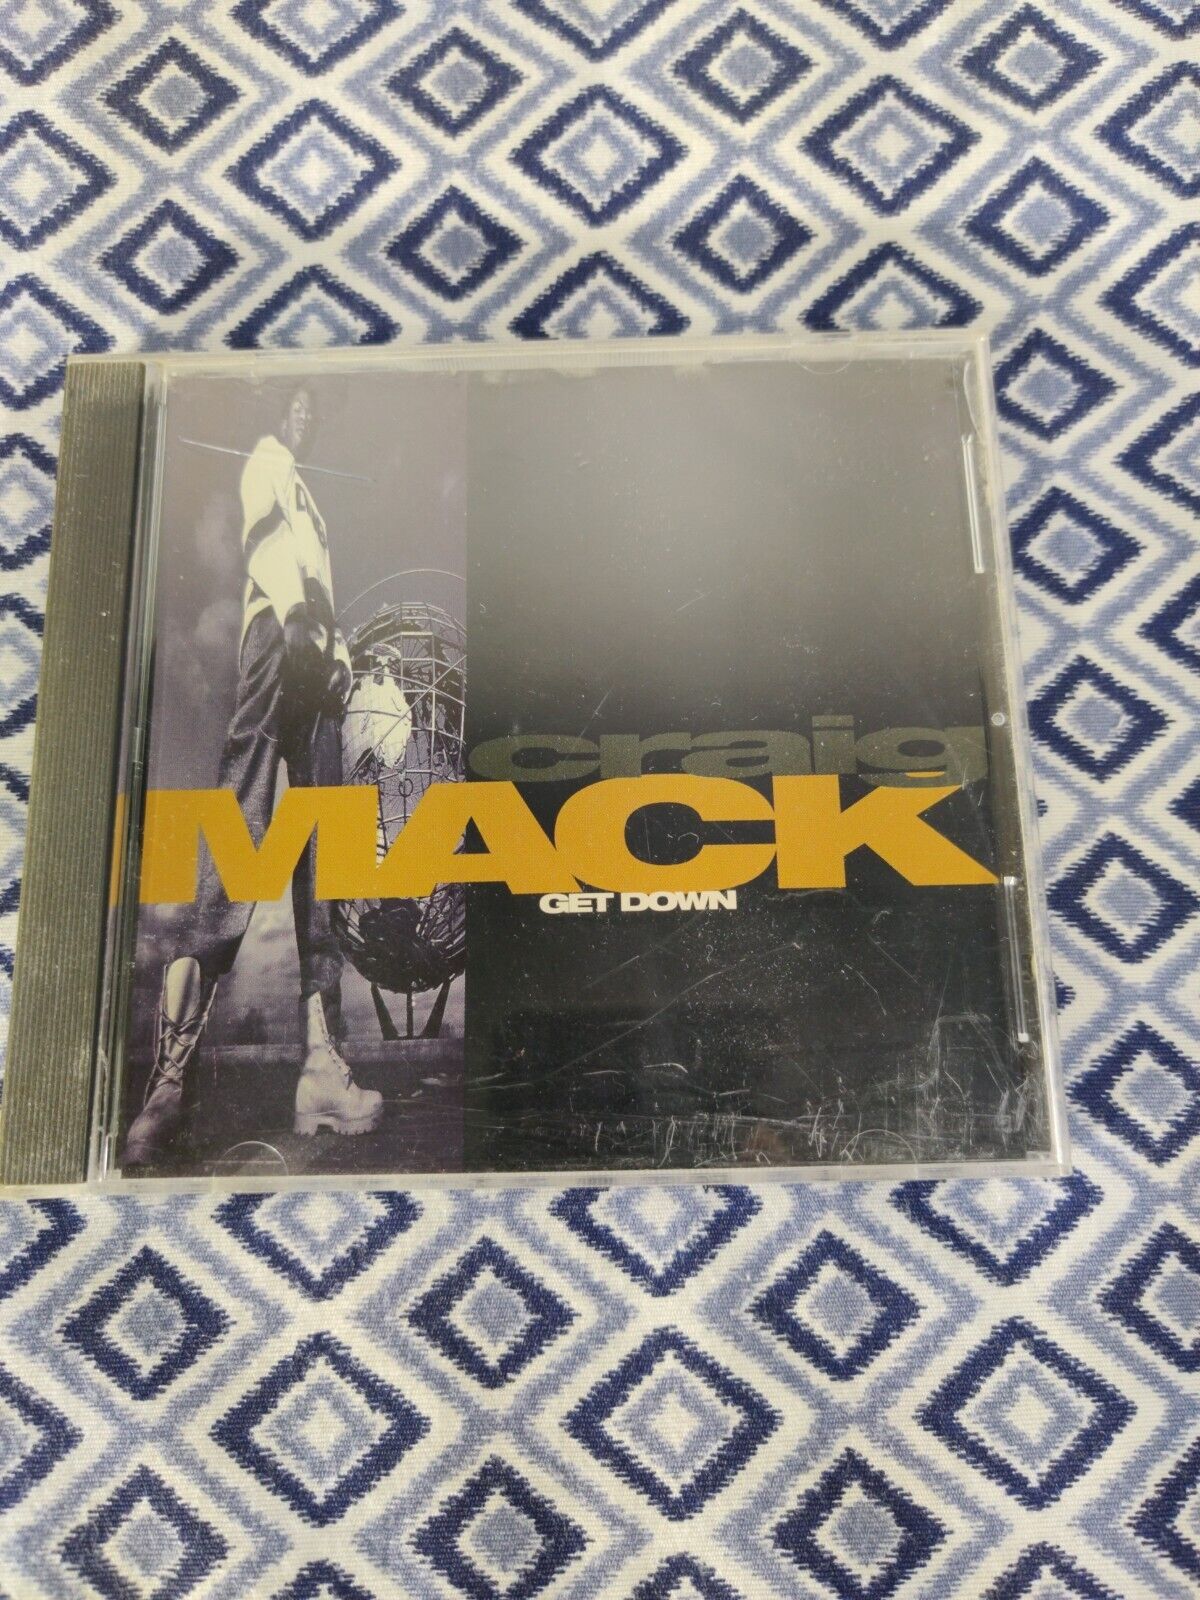 Craig Mack GET DOWN CD, Promo Single